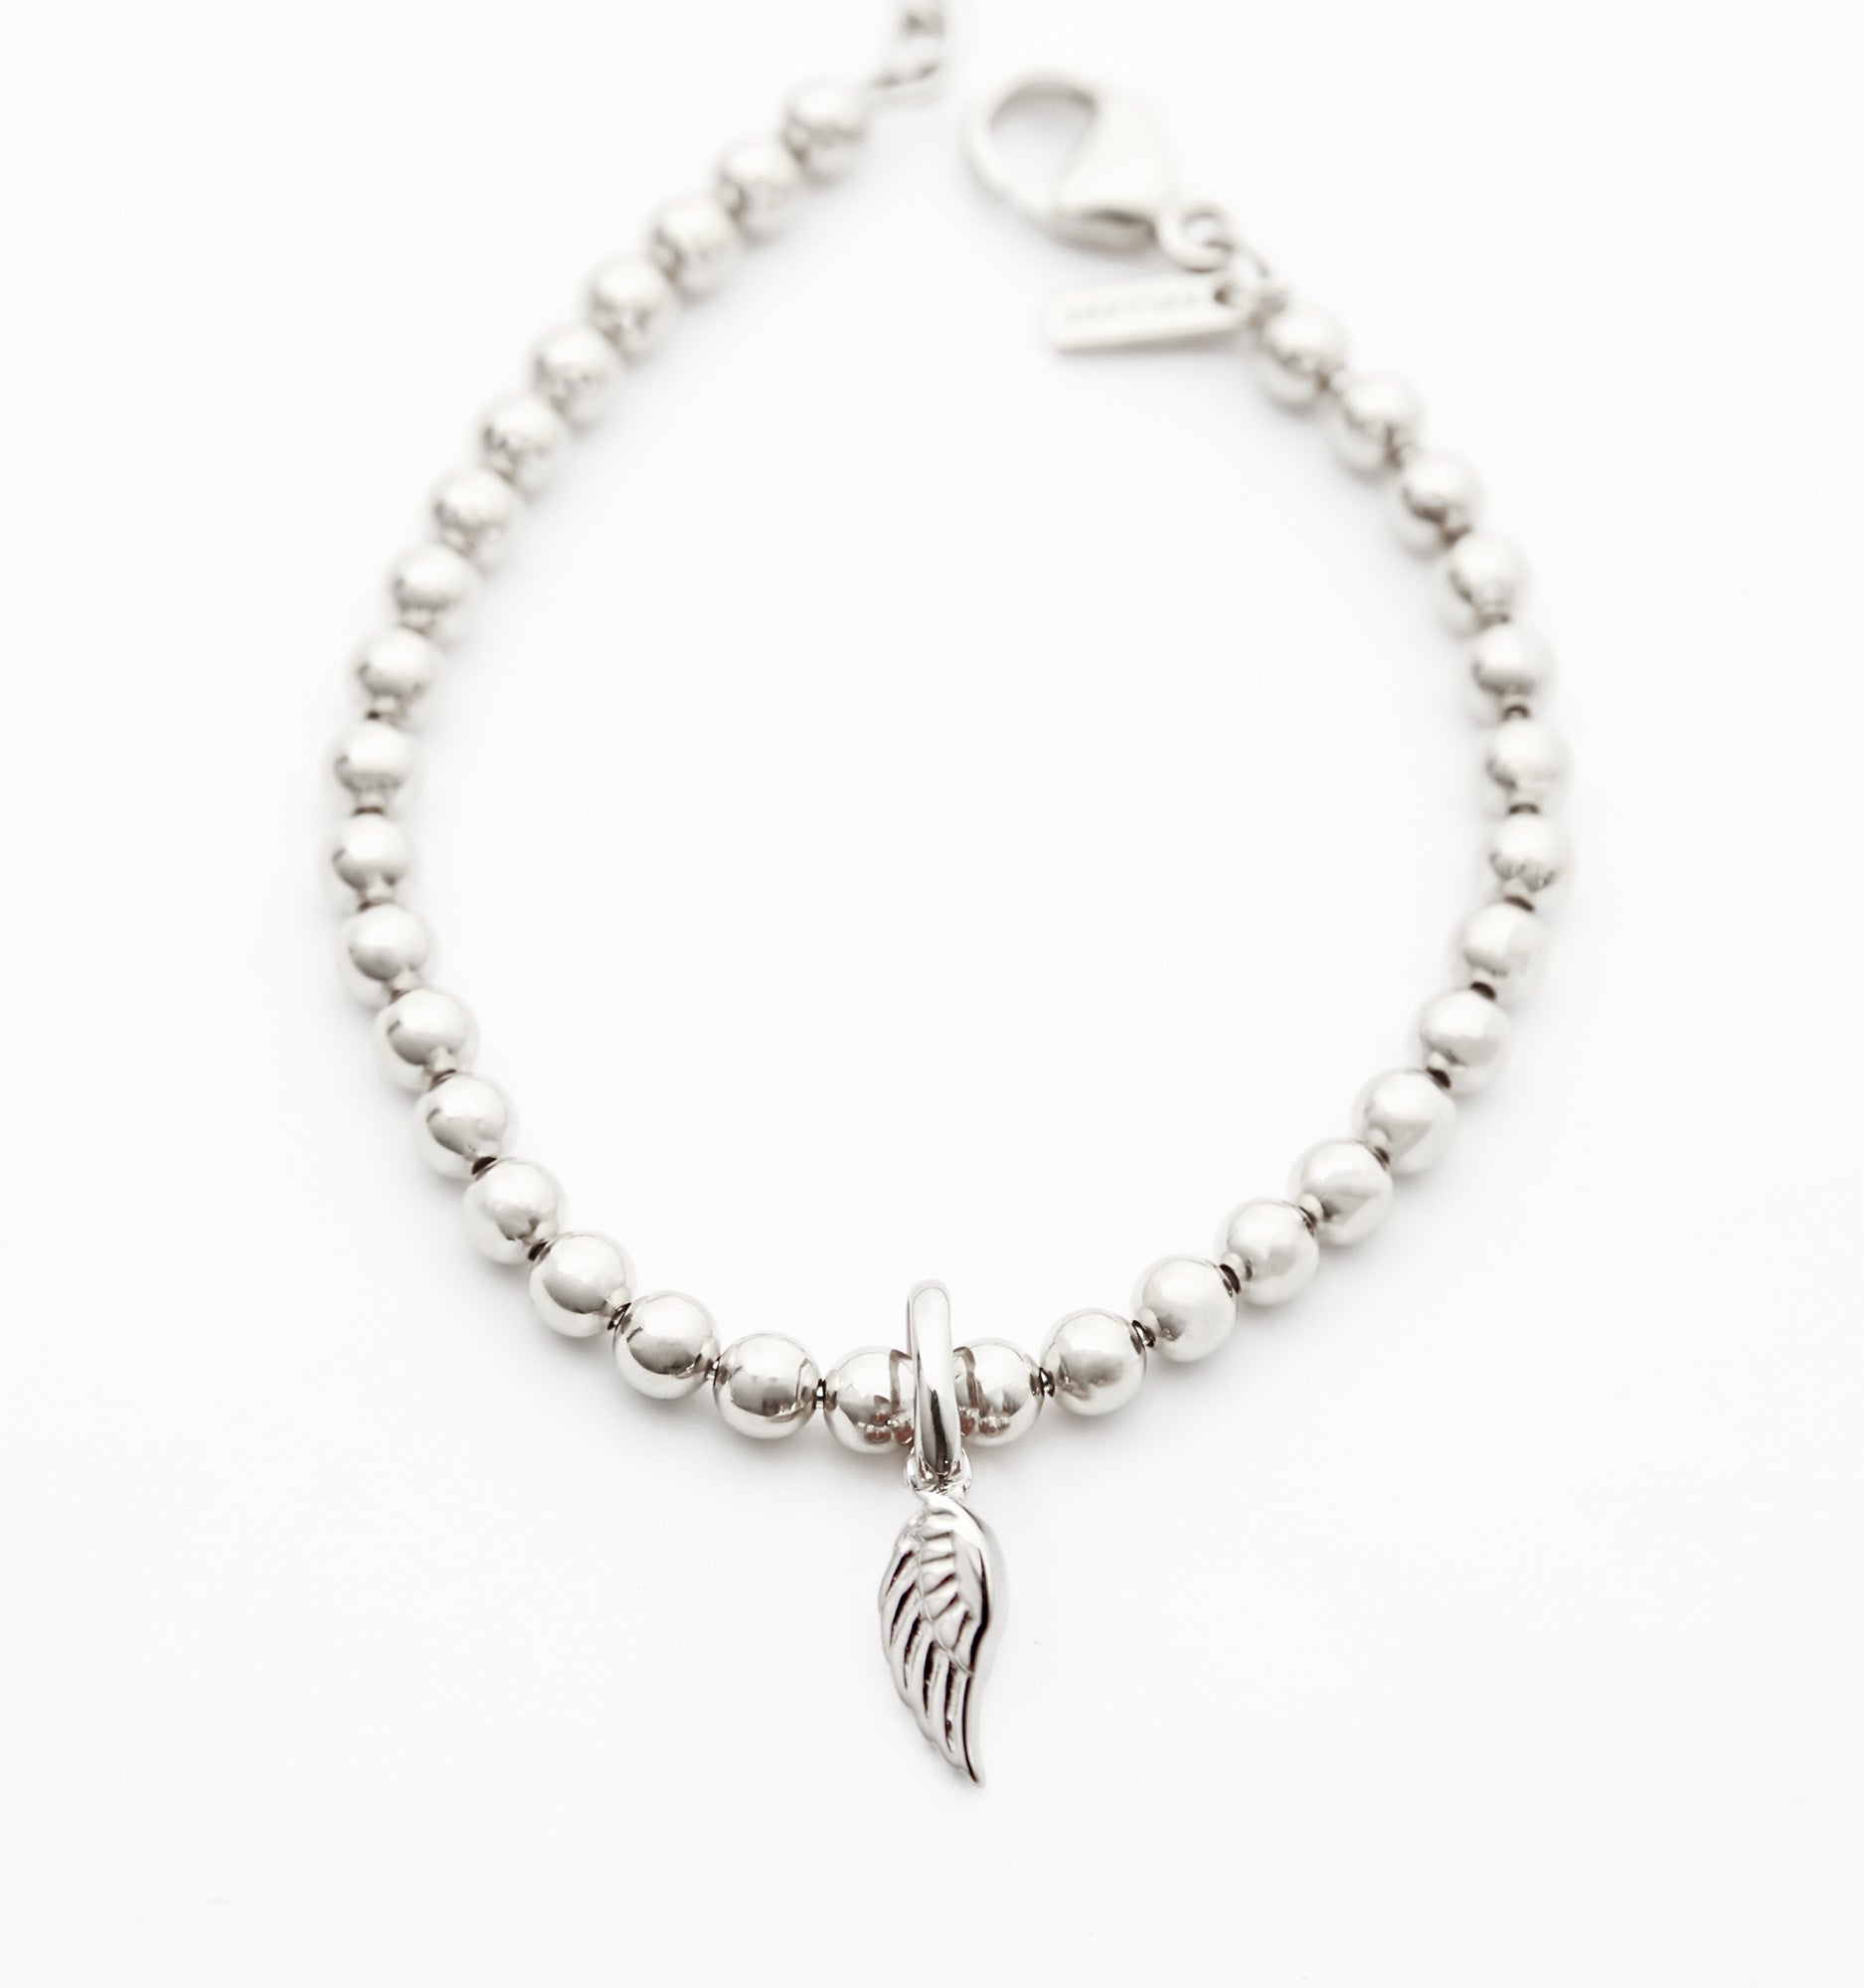 Angel Heart Wing - Cuff Bracelet - Double Wing - Rainbow Stone - AW01